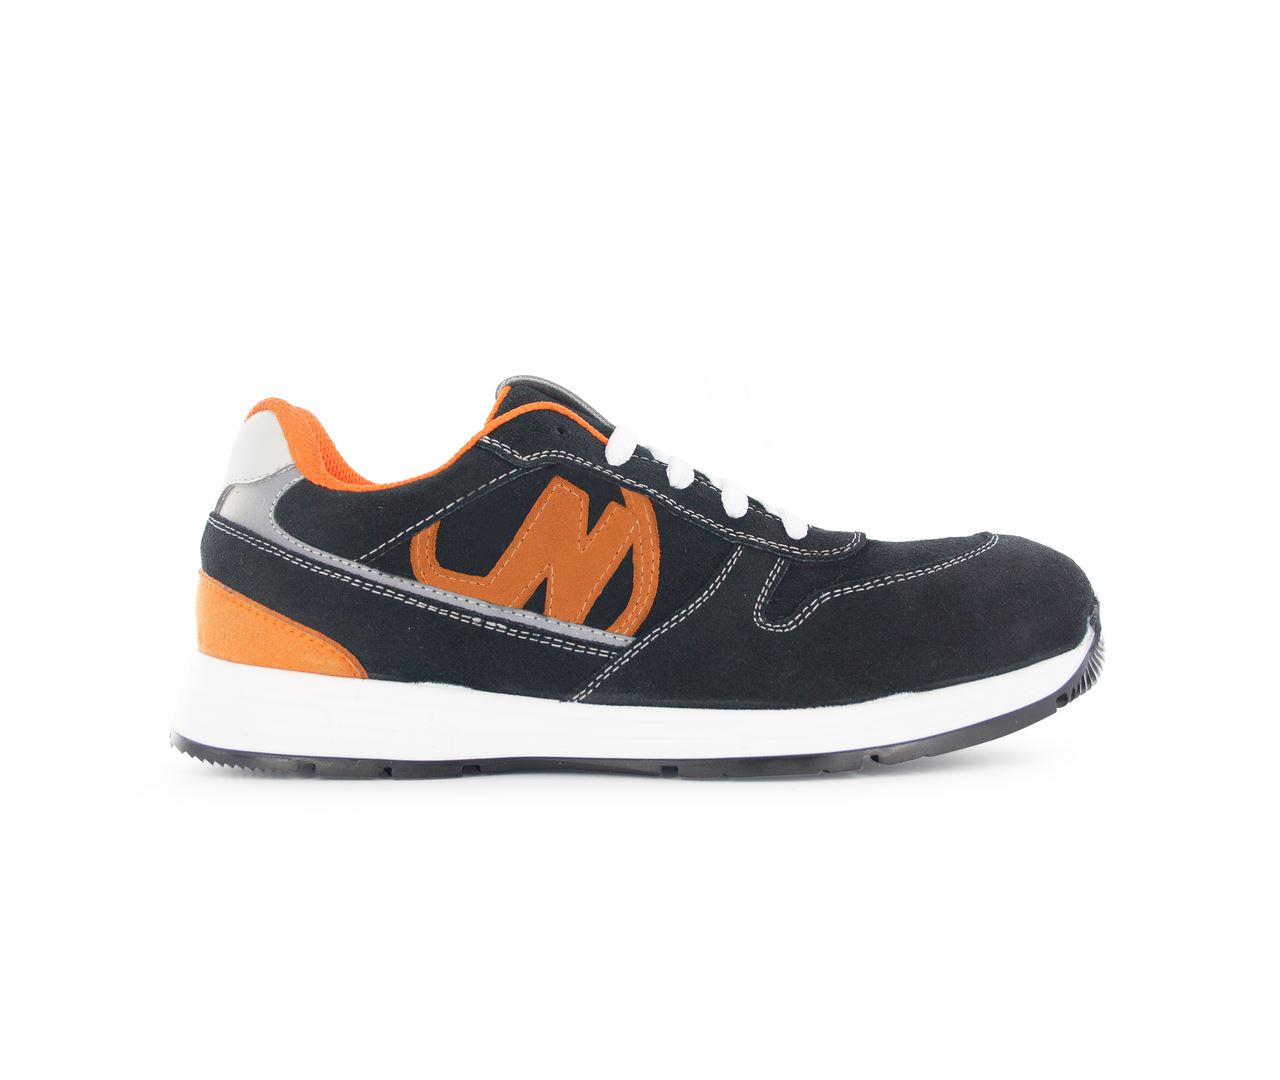 Chaussure de sécurité noir/orange Run Soft T.45 - Nord'Ways - RUN000345000NOOR